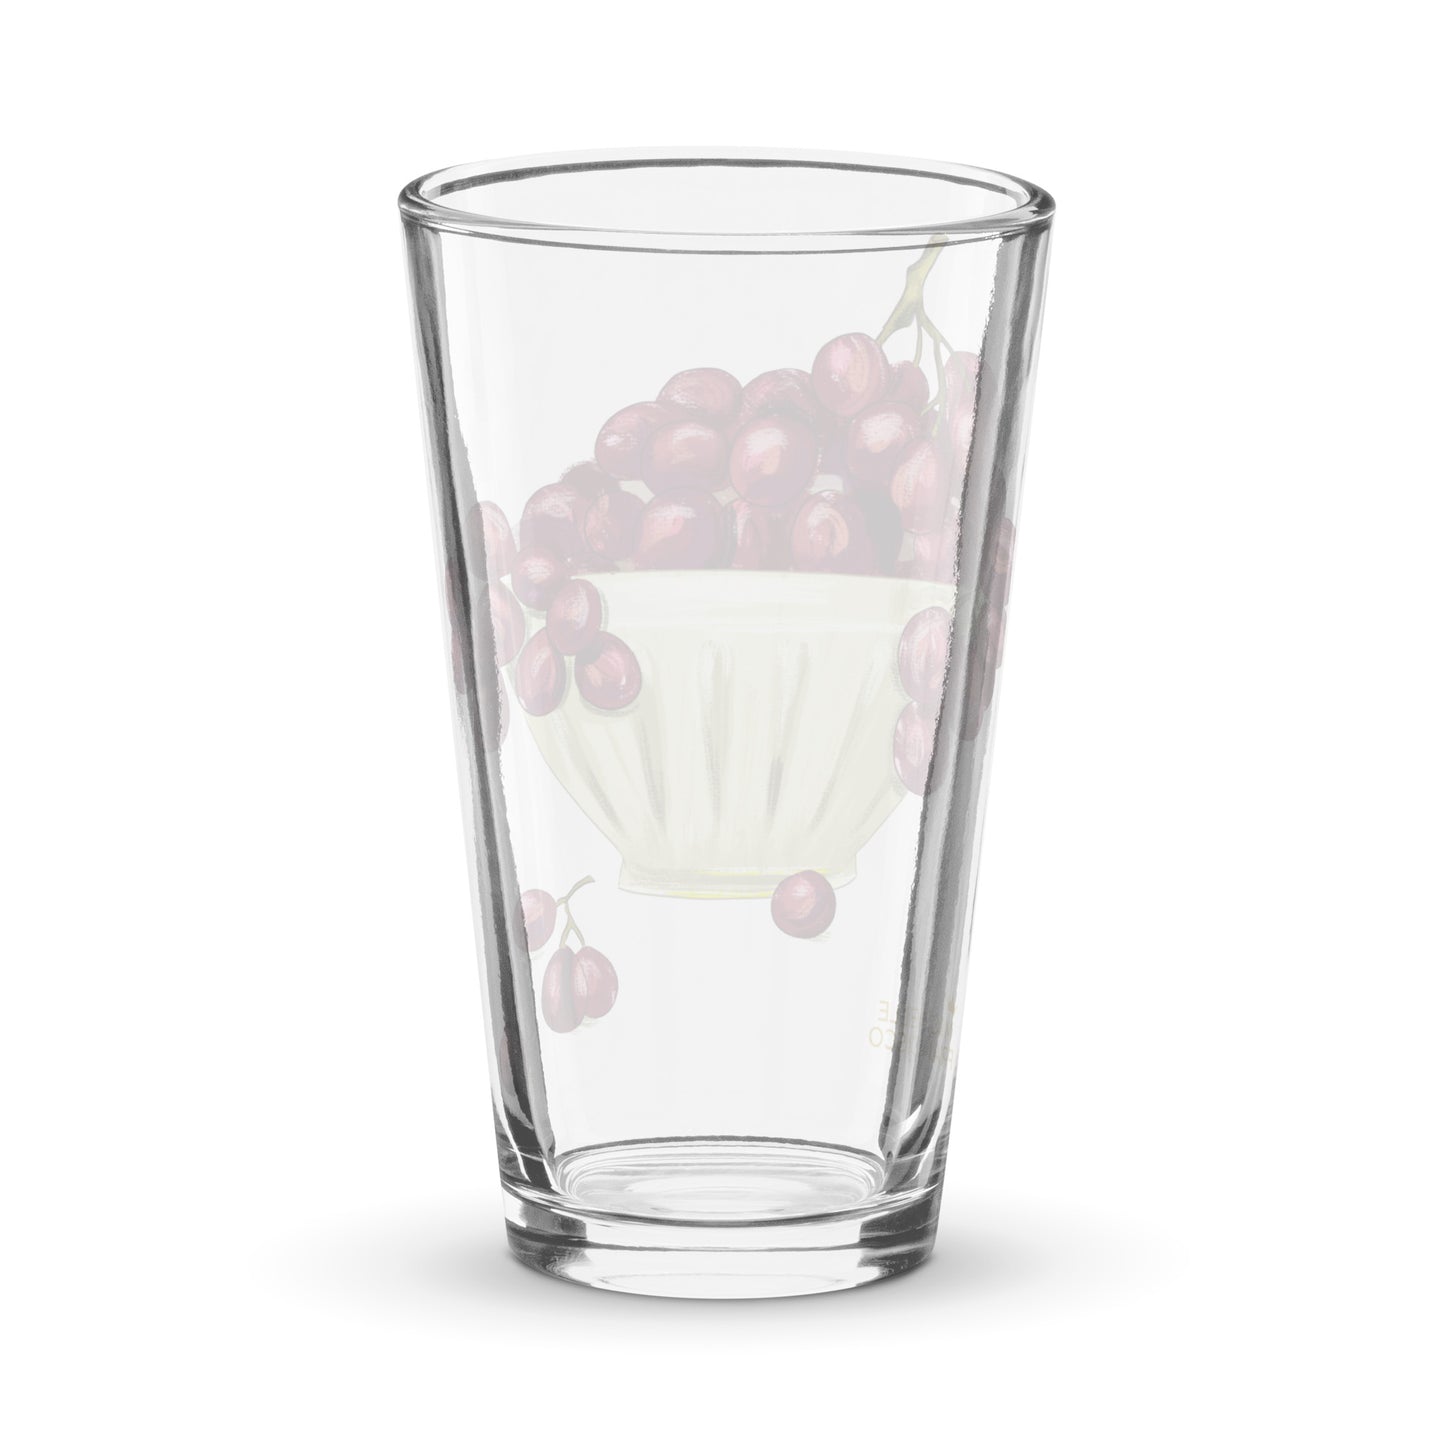 Grapes Shaker Pint Glass